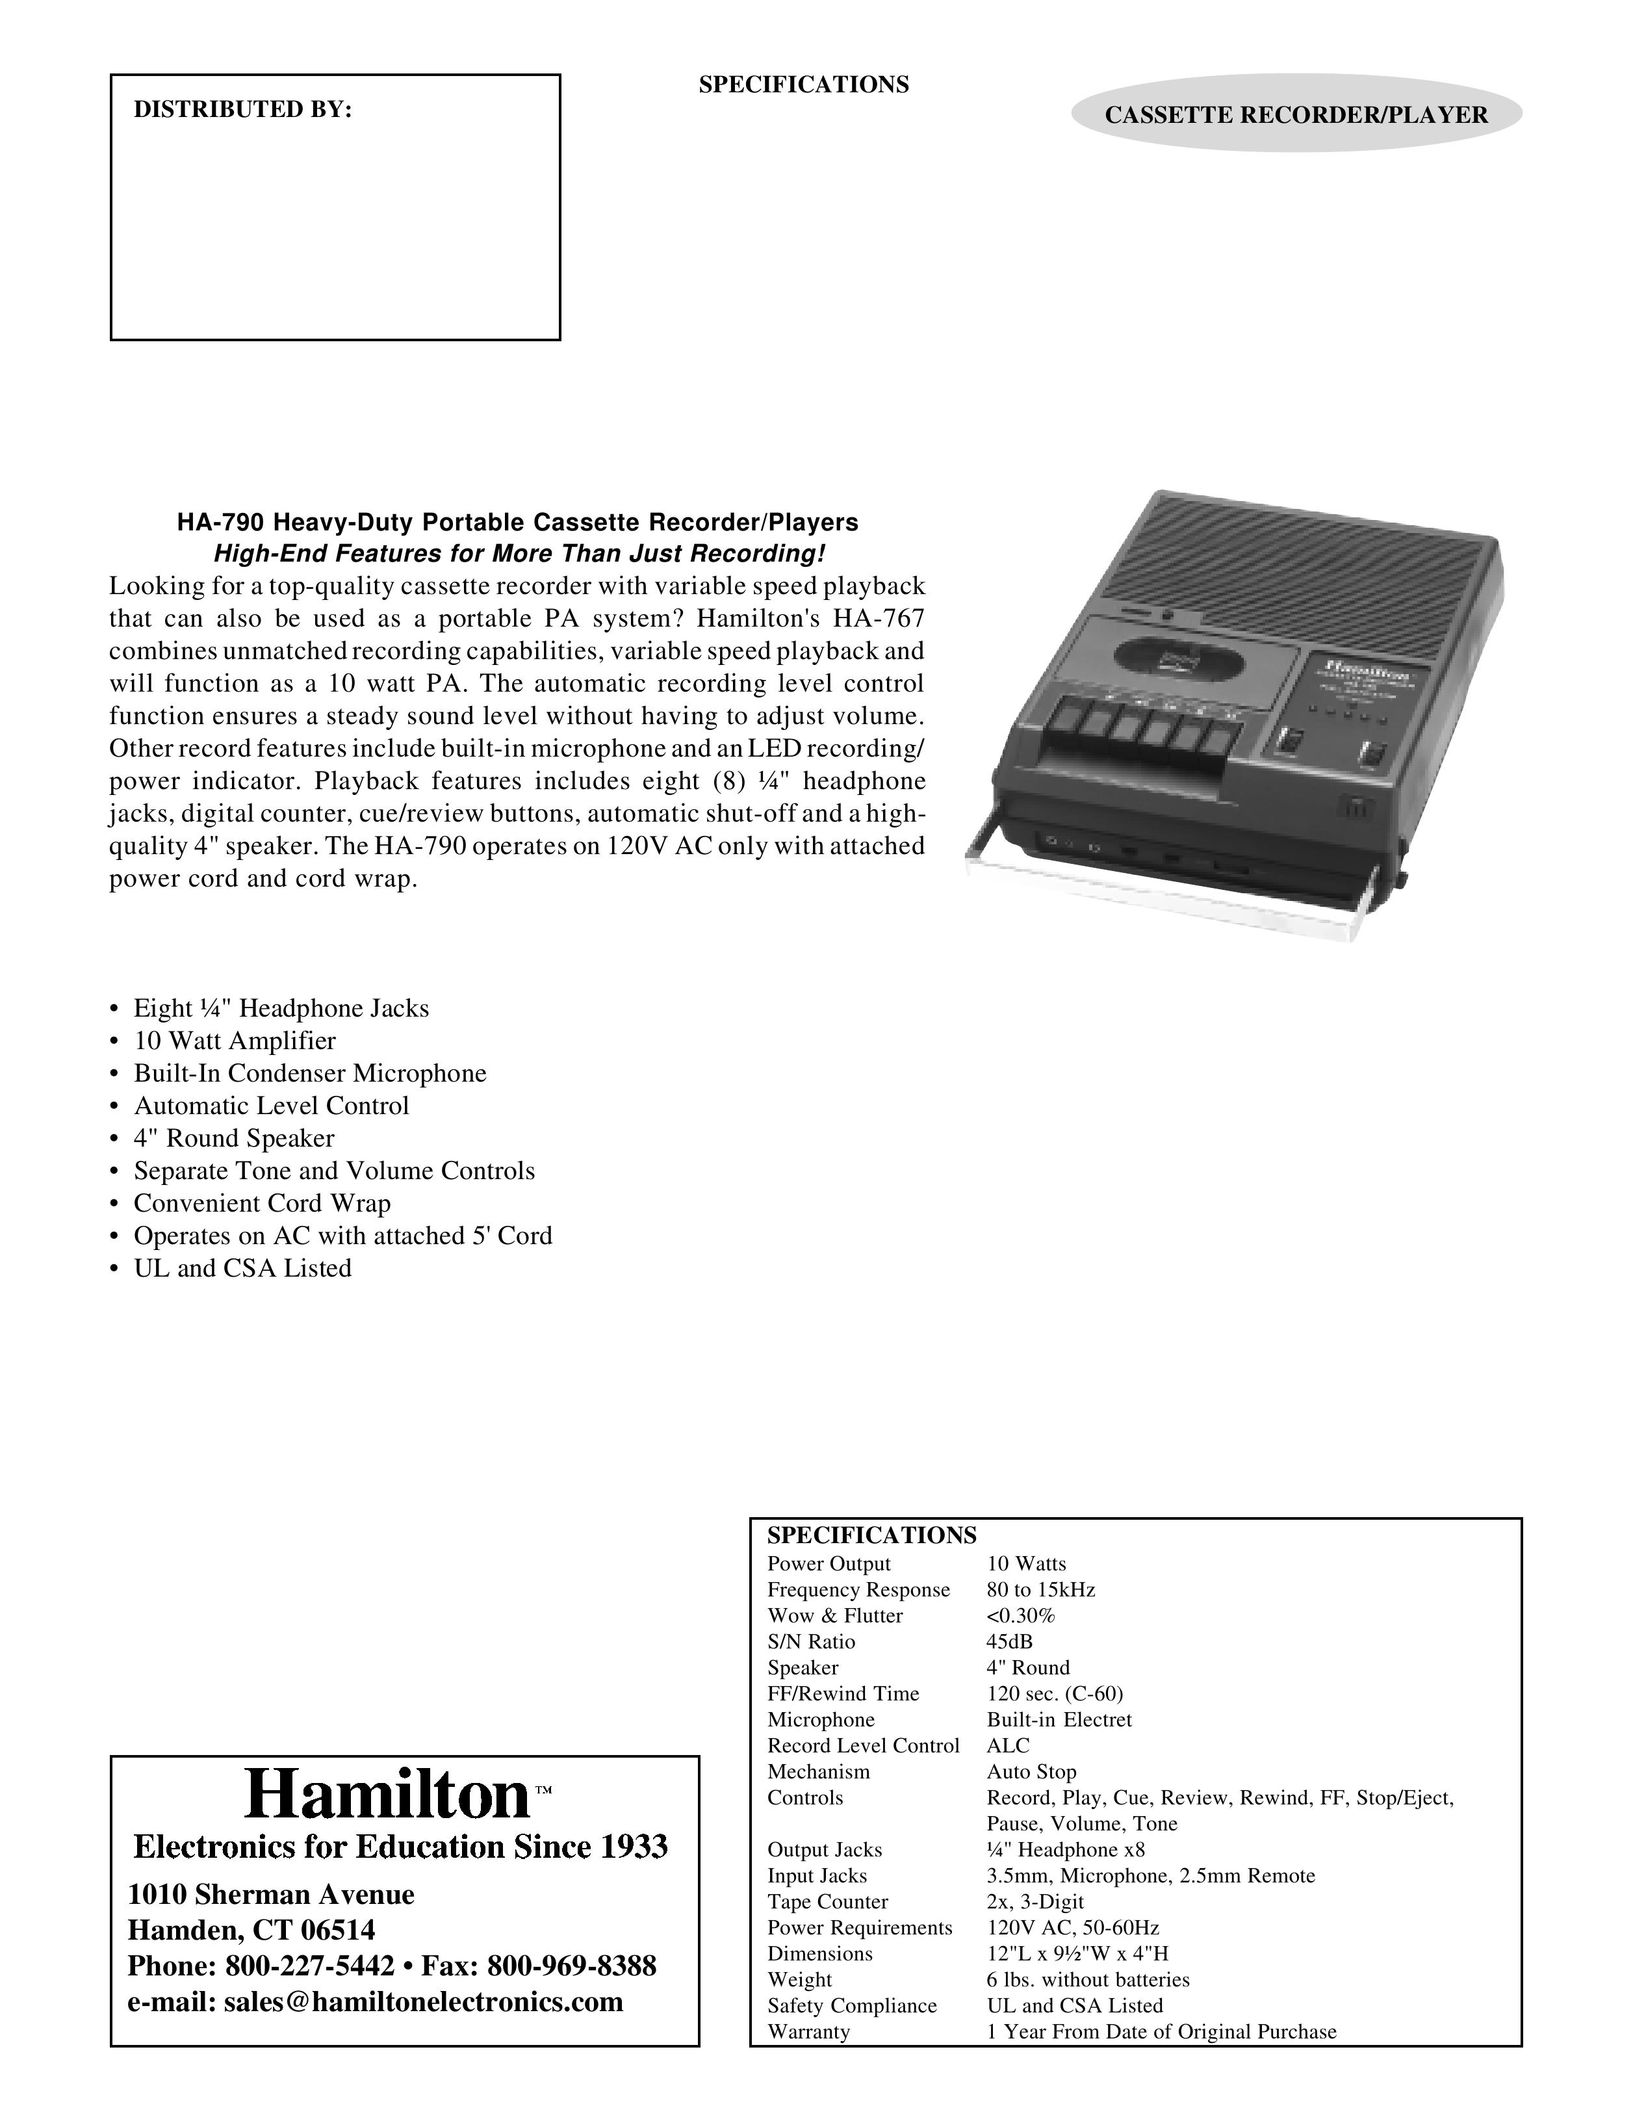 Hamilton Electronics HA-790 Microcassette Recorder User Manual